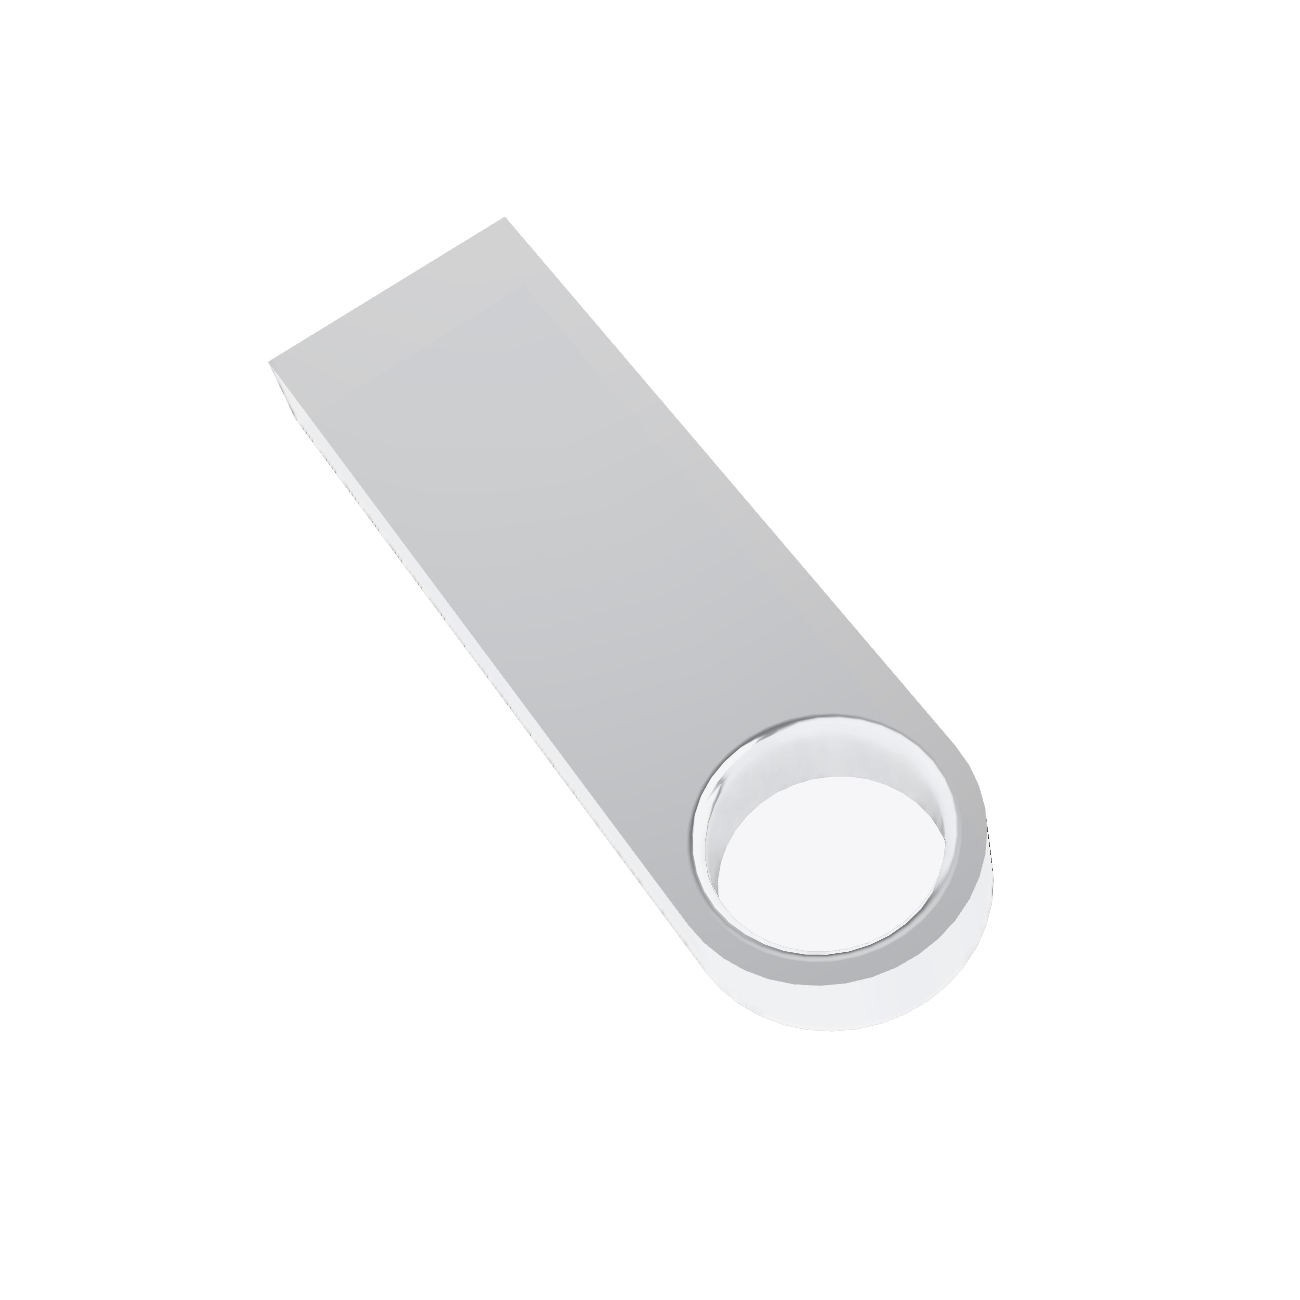 USB GERMANY ® SE09 64 (Silber, USB-Stick GB)